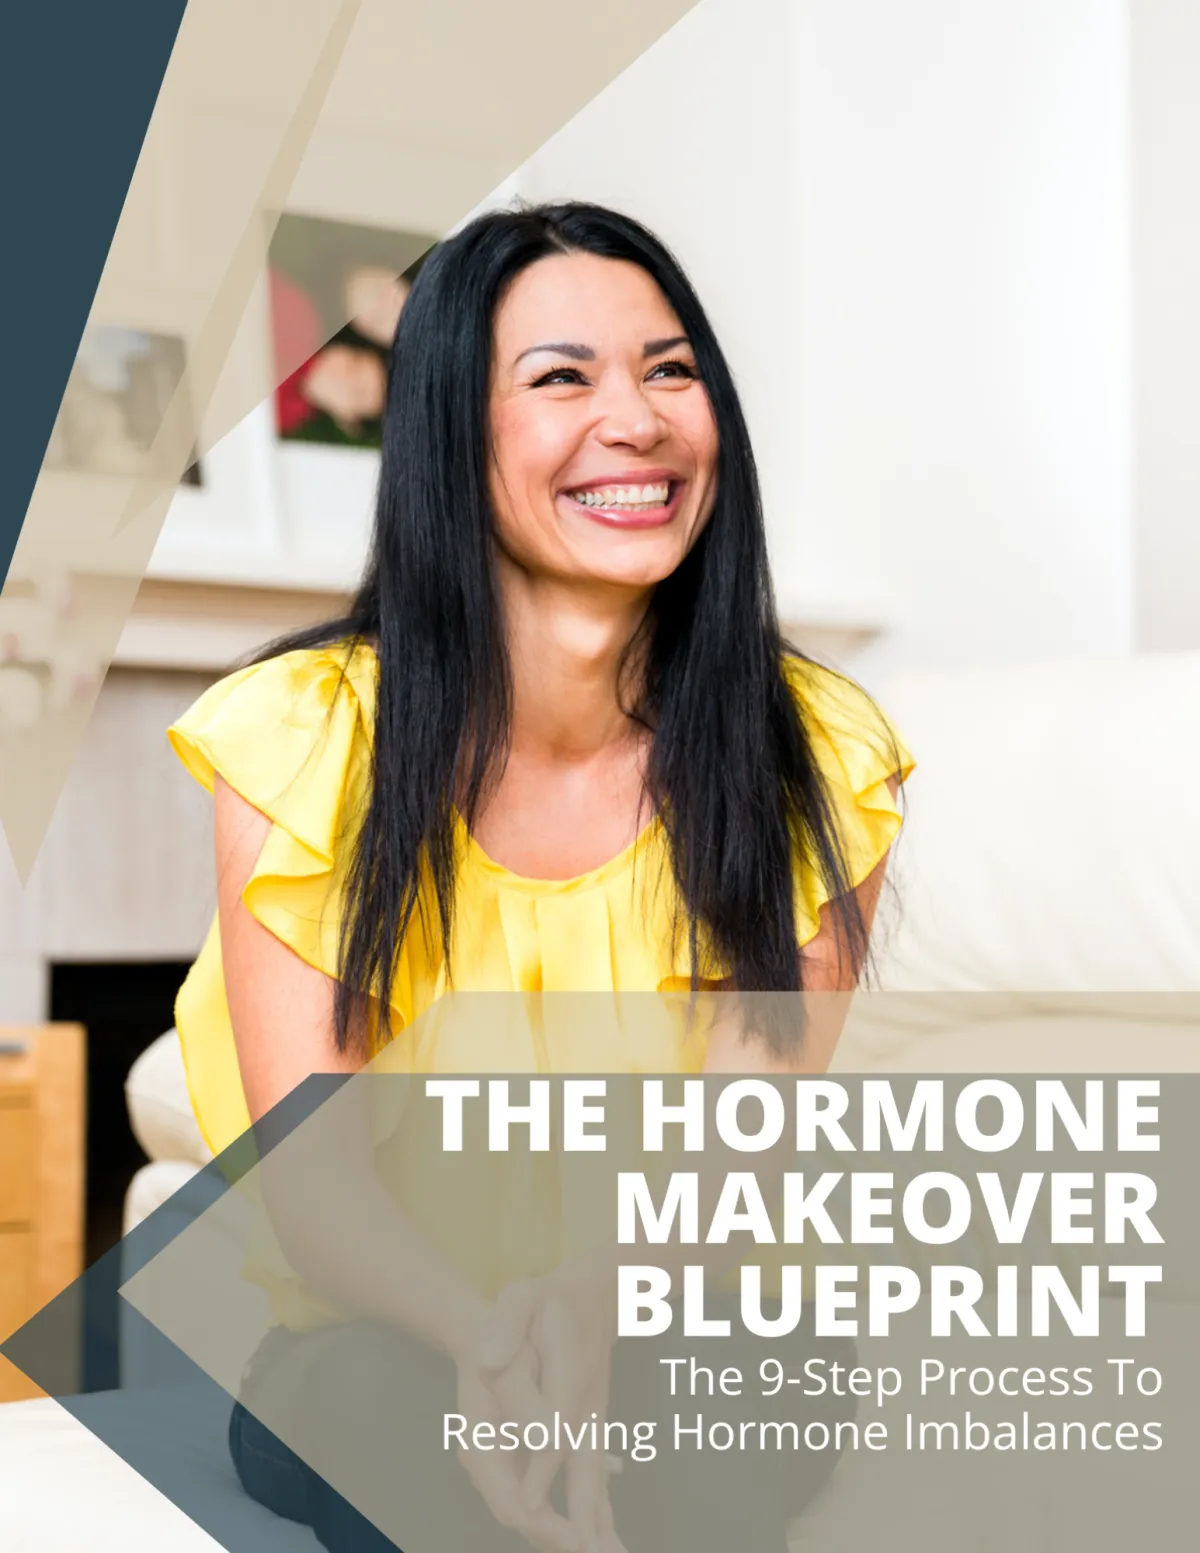 Treating Hormone Imbalances